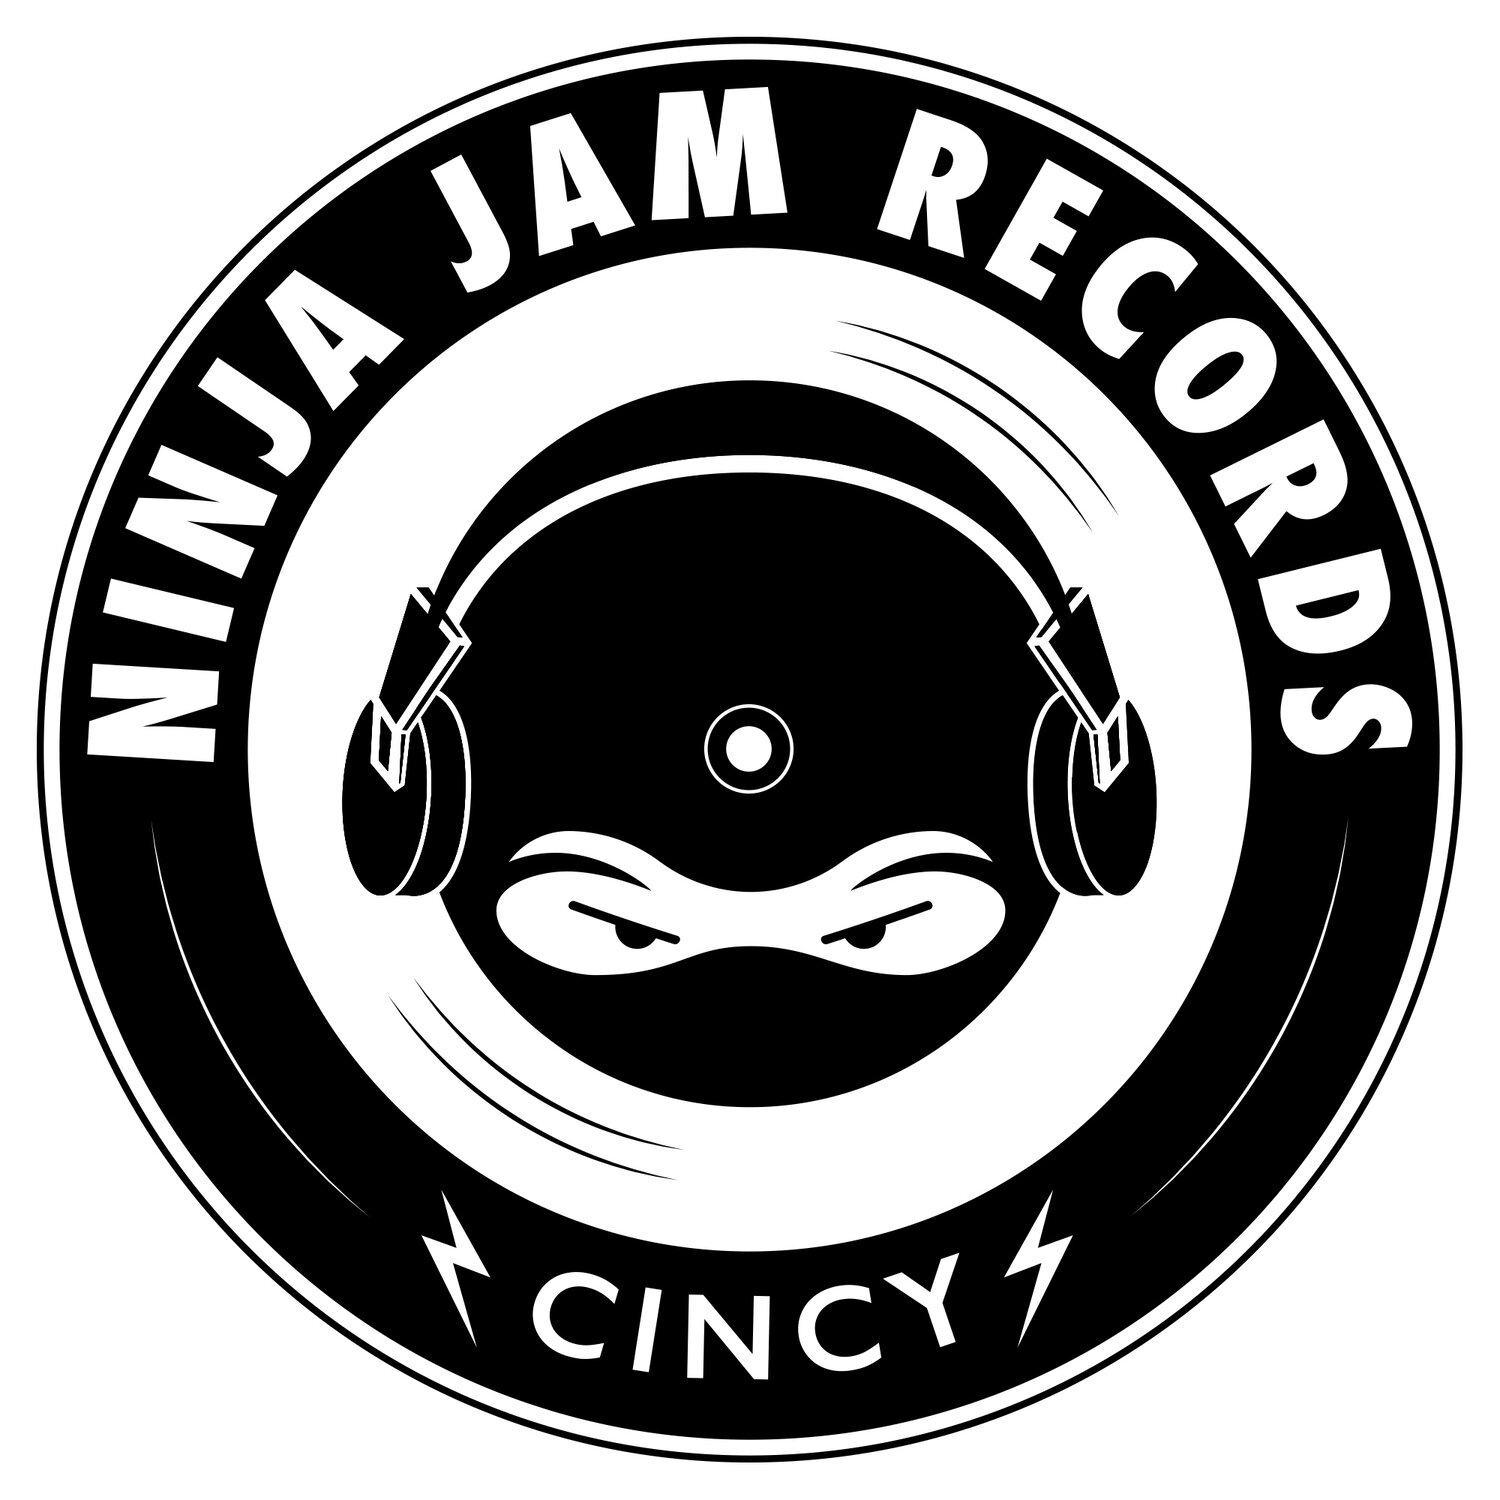 Ninja Jam Records